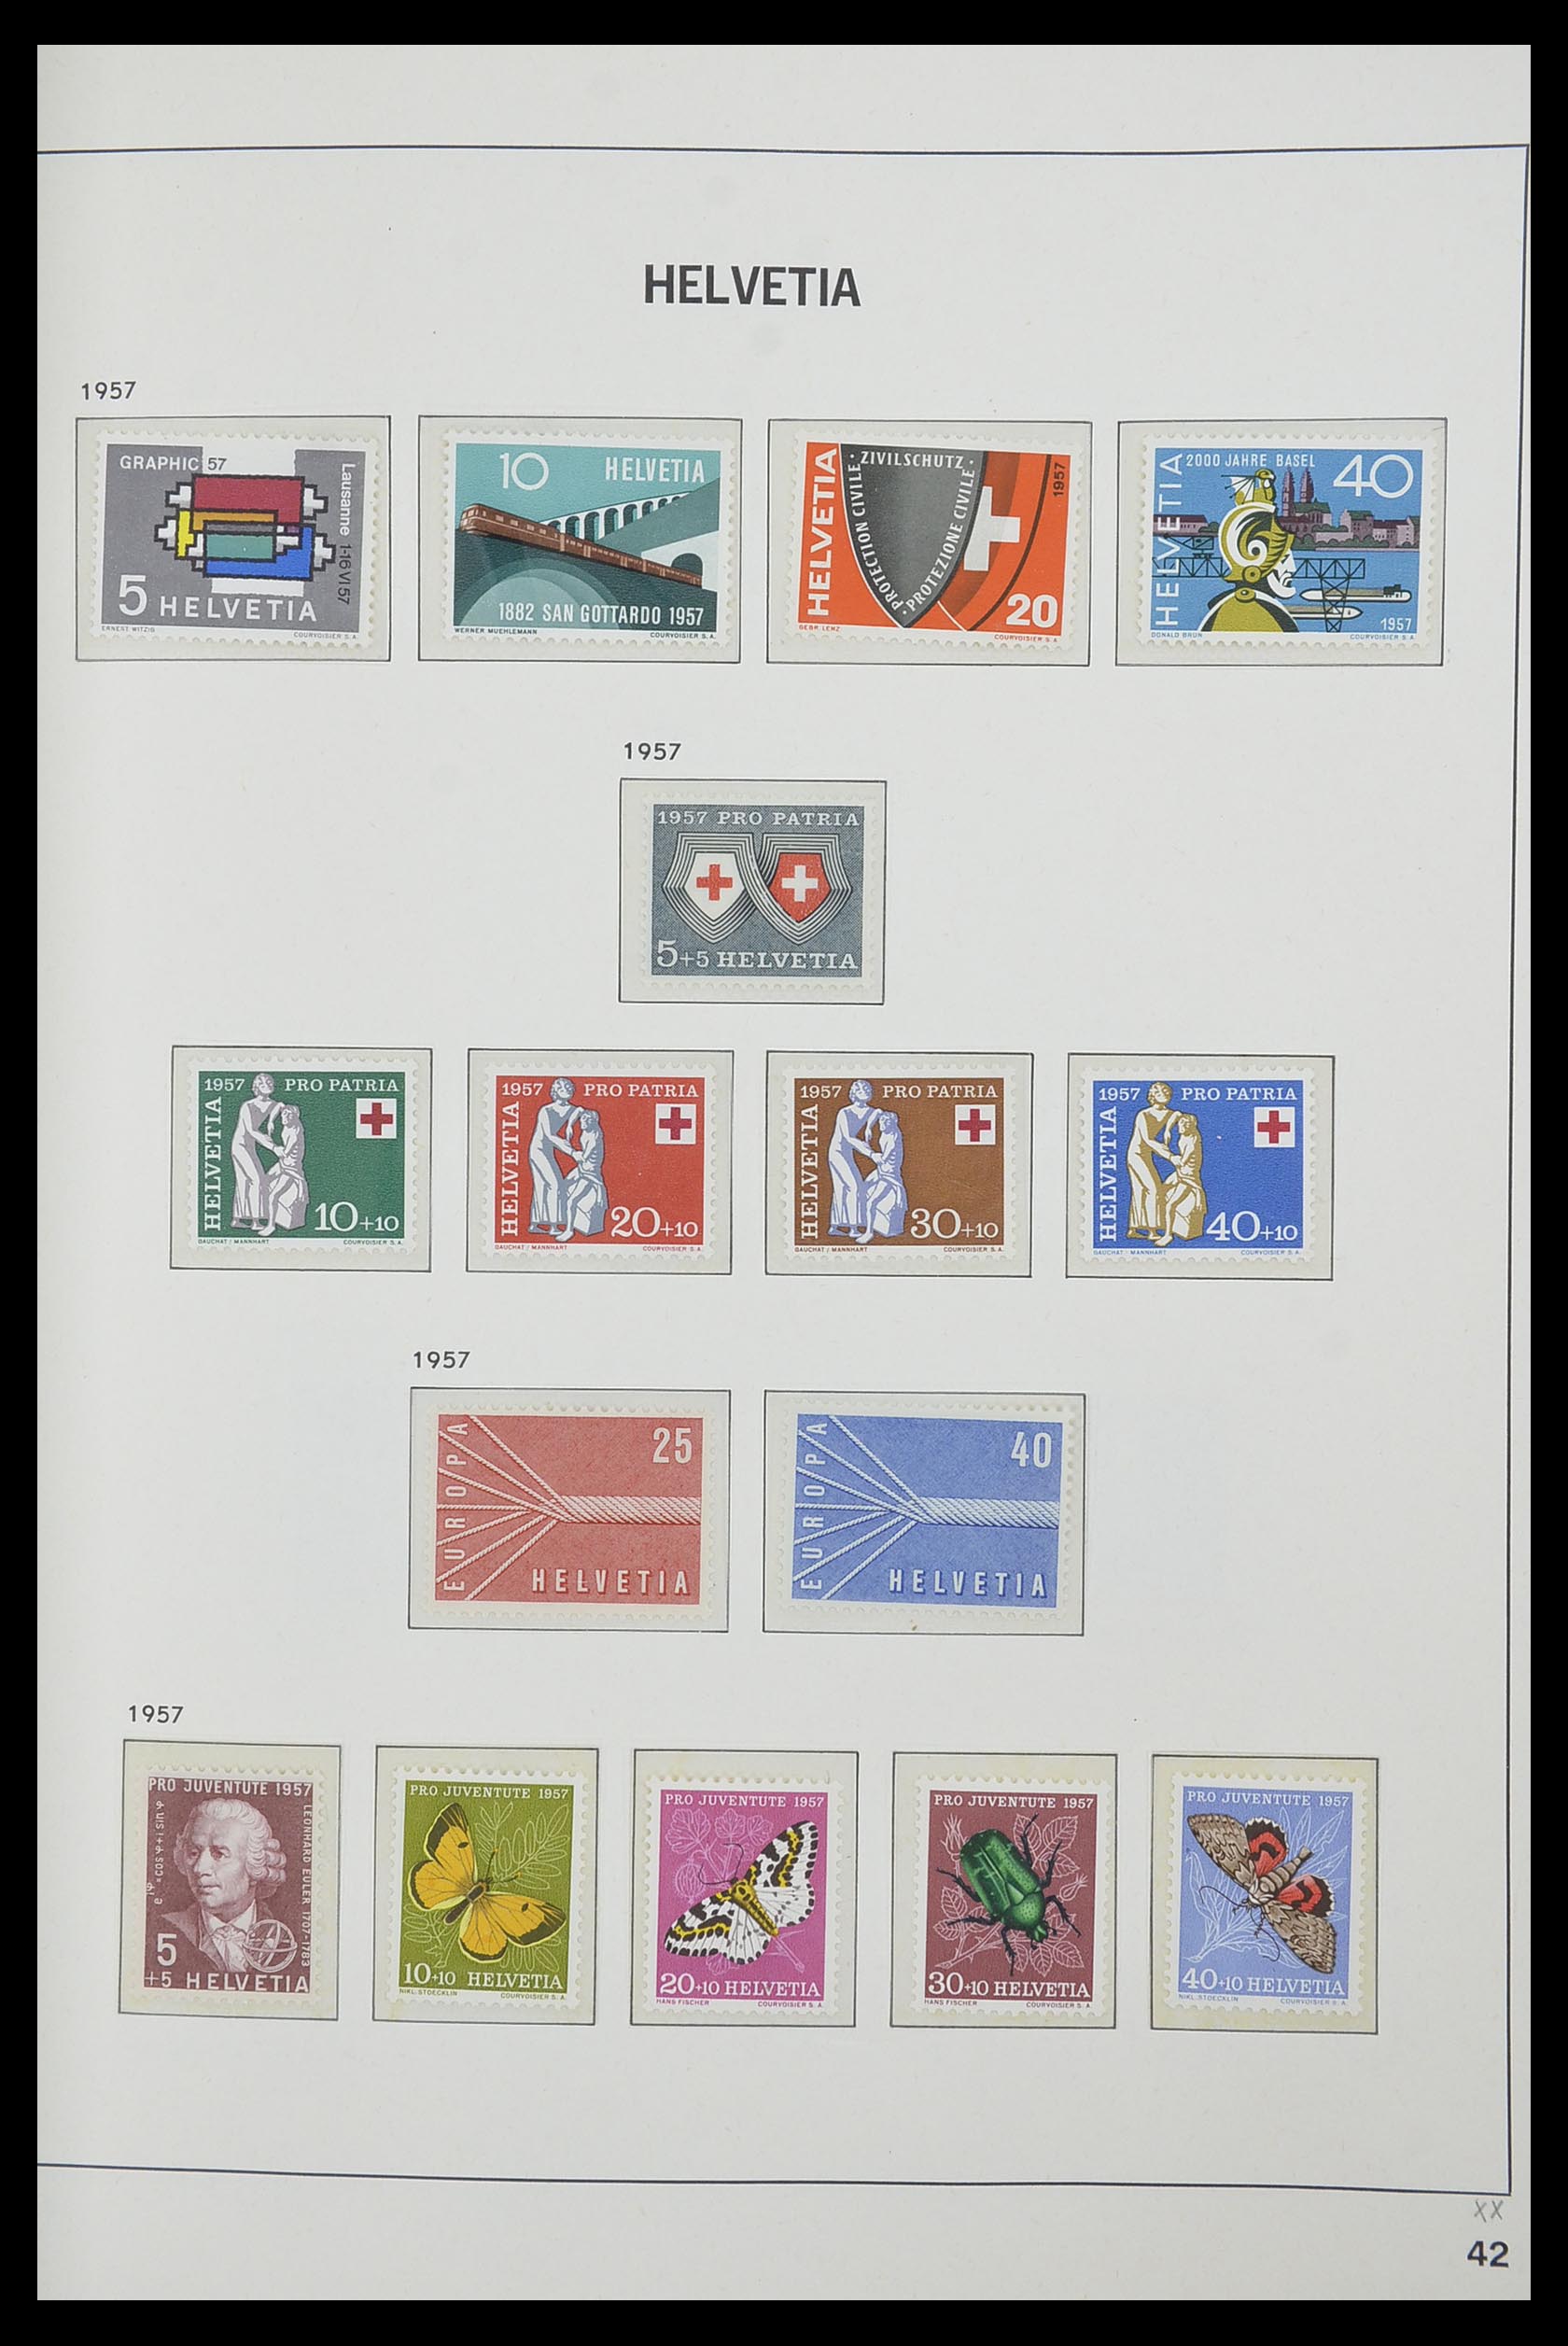 33556 042 - Stamp collection 33556 Switzerland 1862-2000.